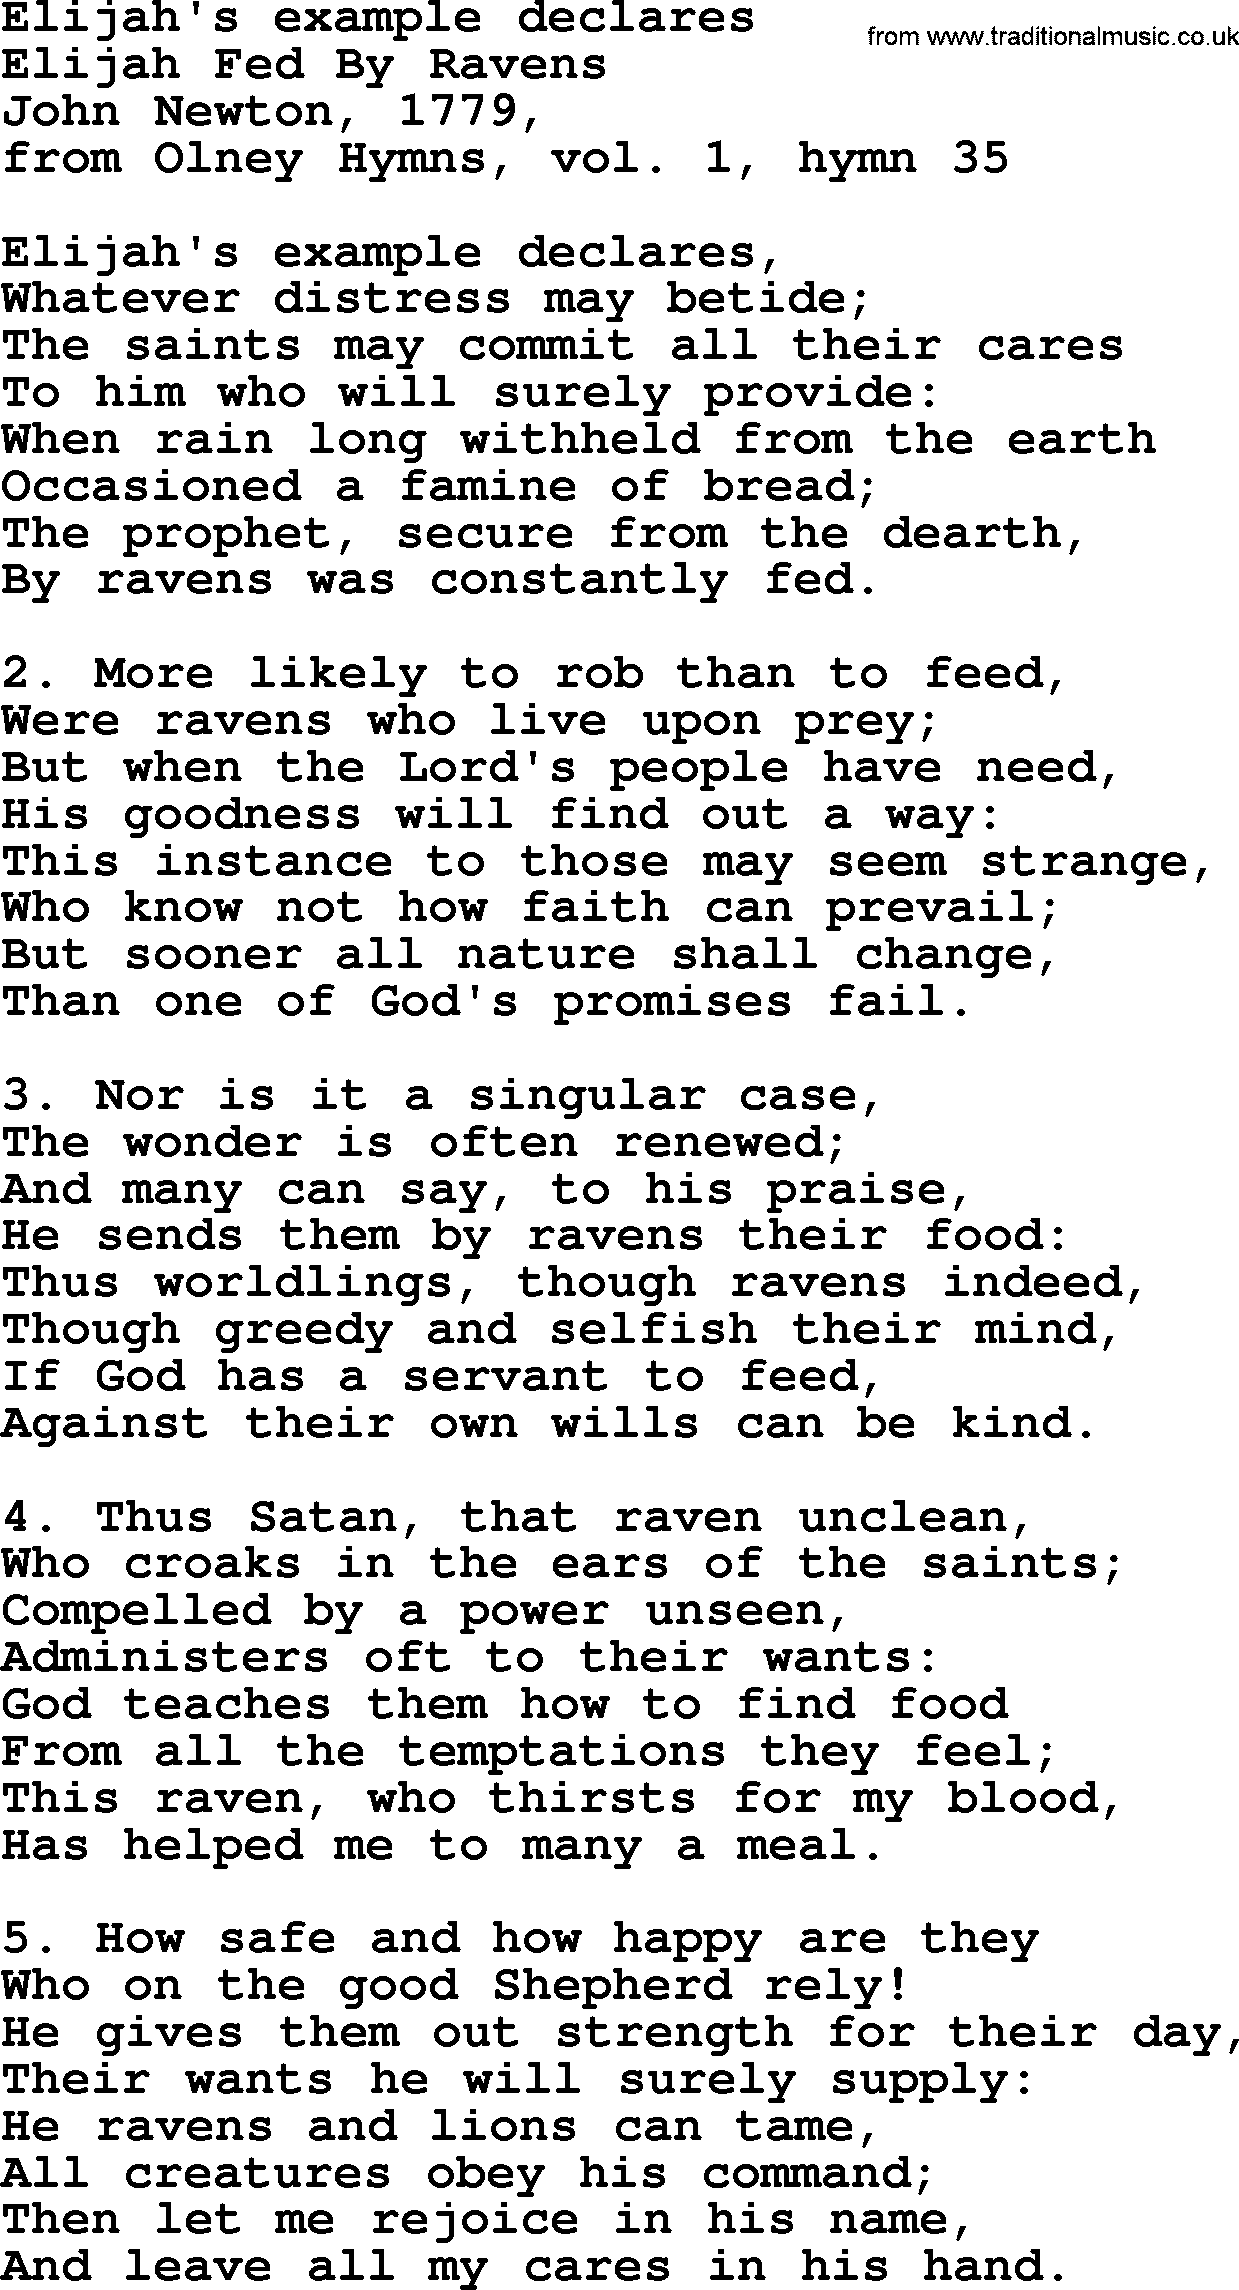 John Newton hymn: Elijah's Example Declares, lyrics